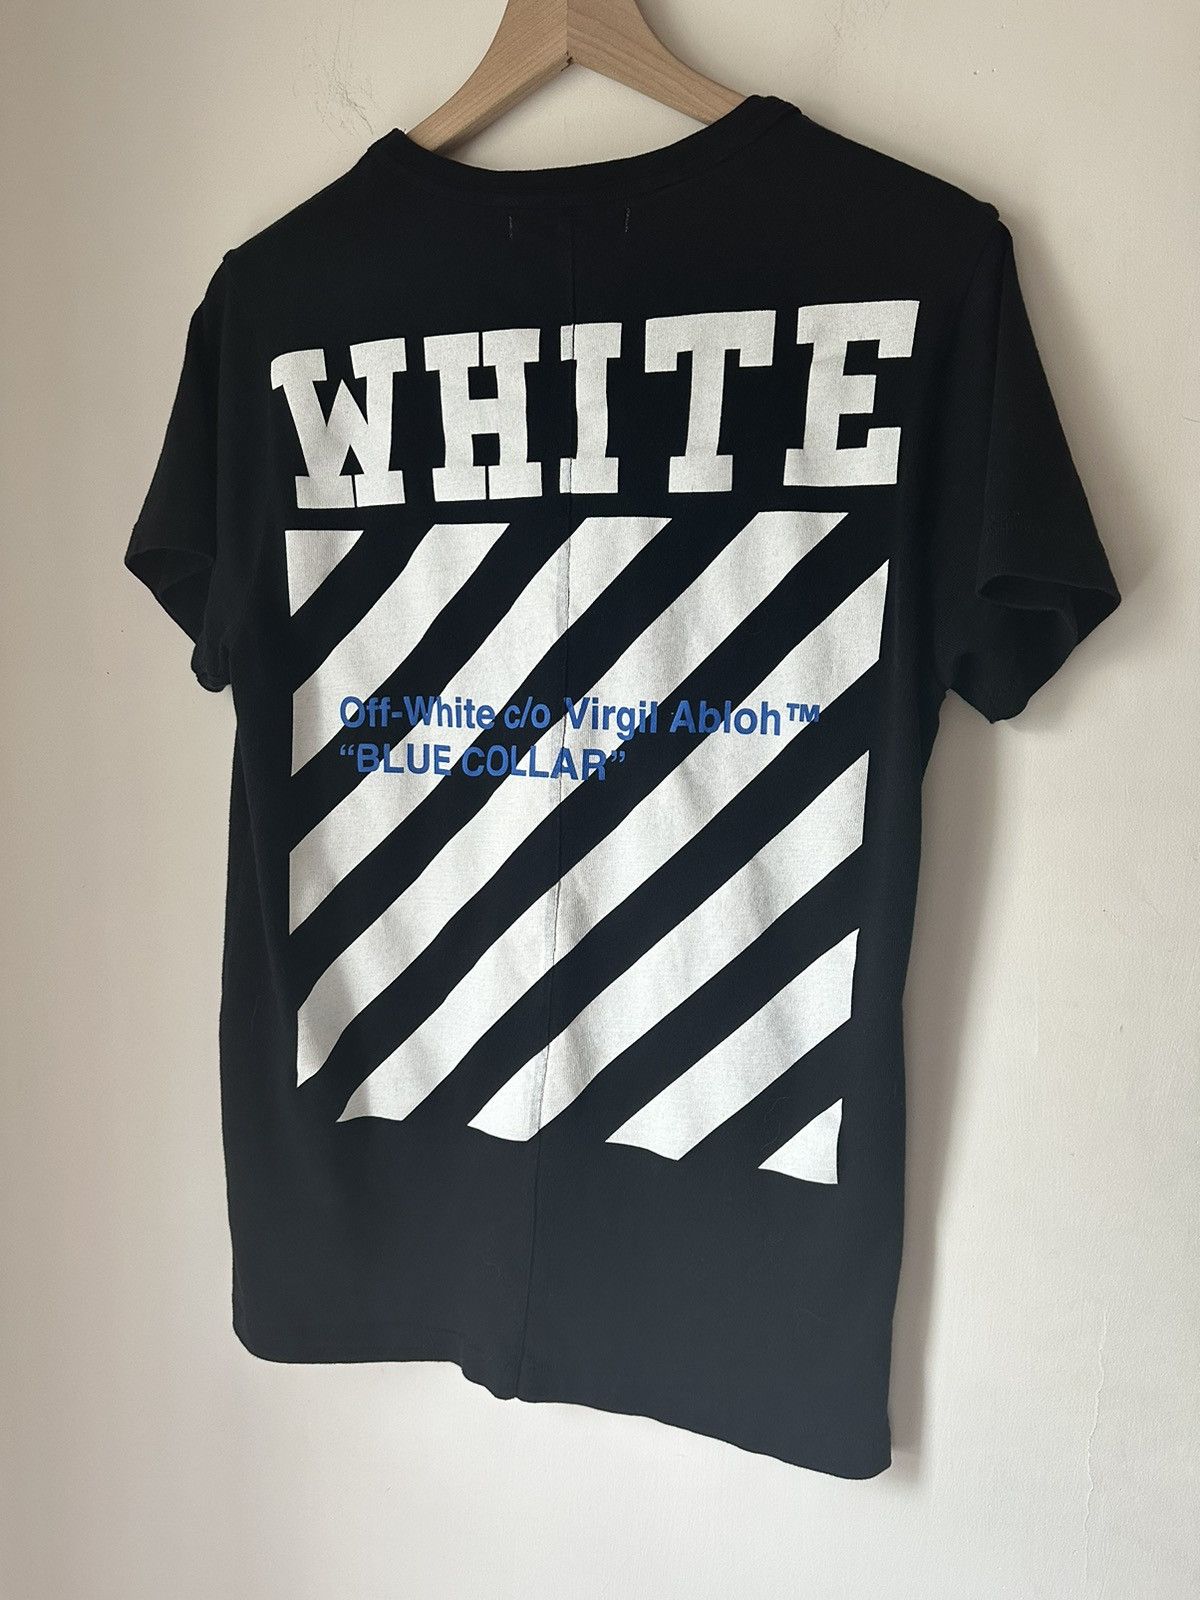 OFF-WHITE Blue Collar T-Shirt Black - 3